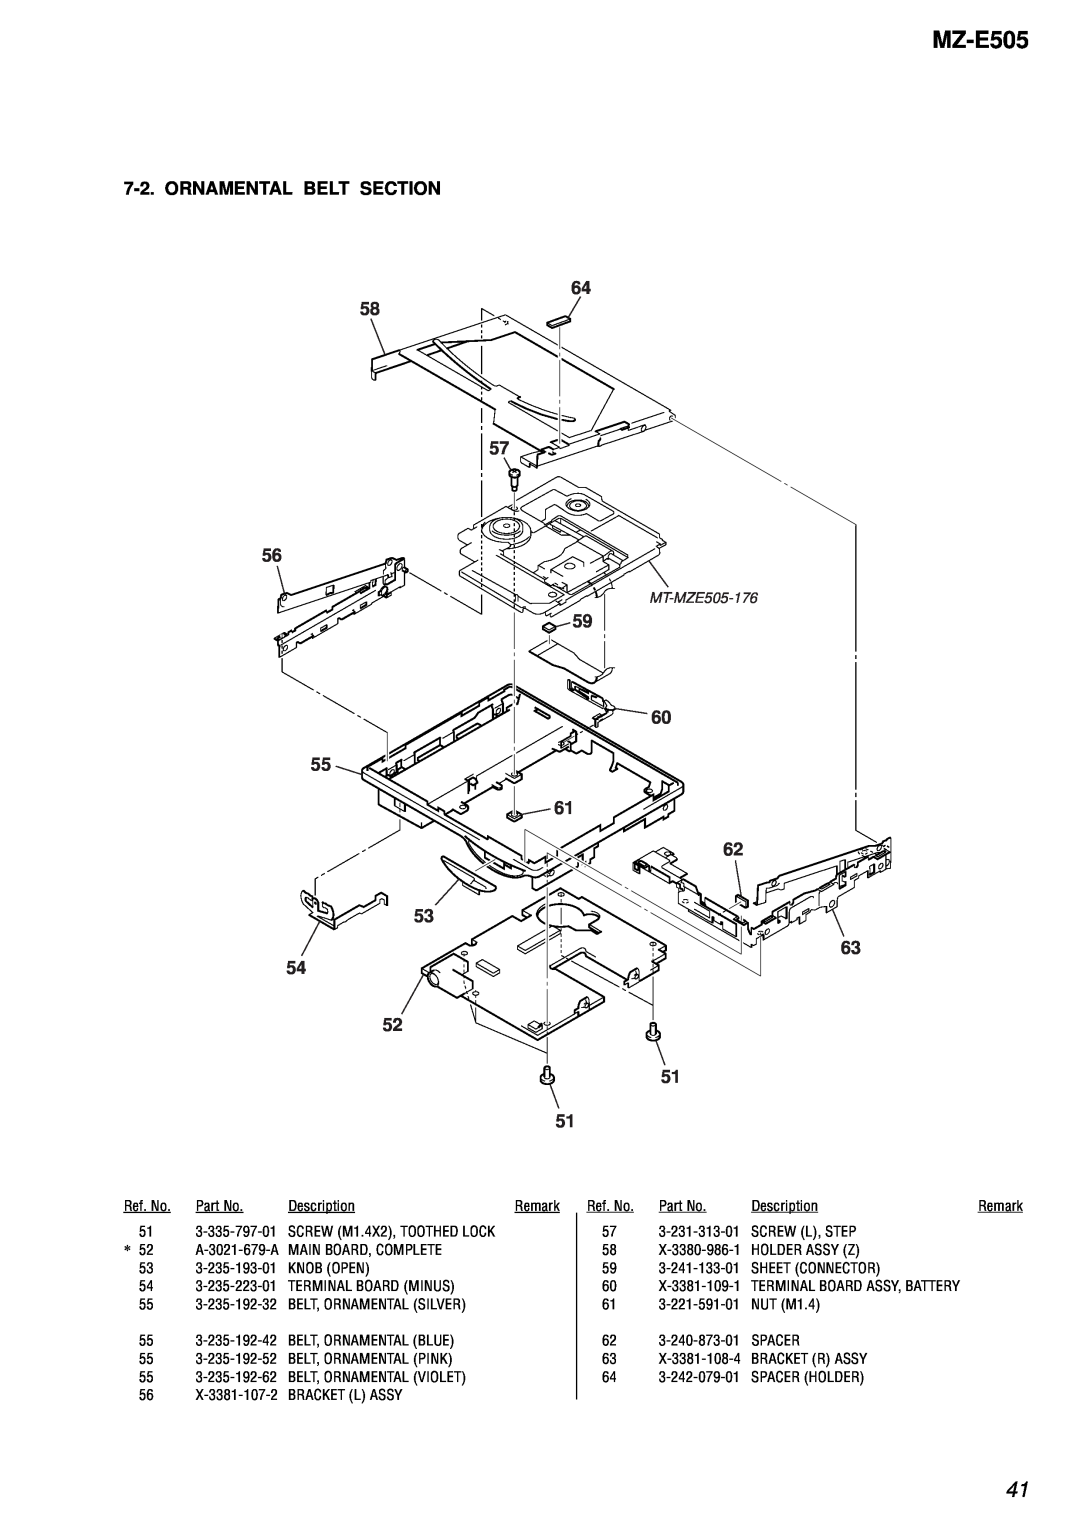 Sony MZ-E505 service manual Ornamental Belt Section, 59 60 55 61 62 53, MT-MZE505-176 